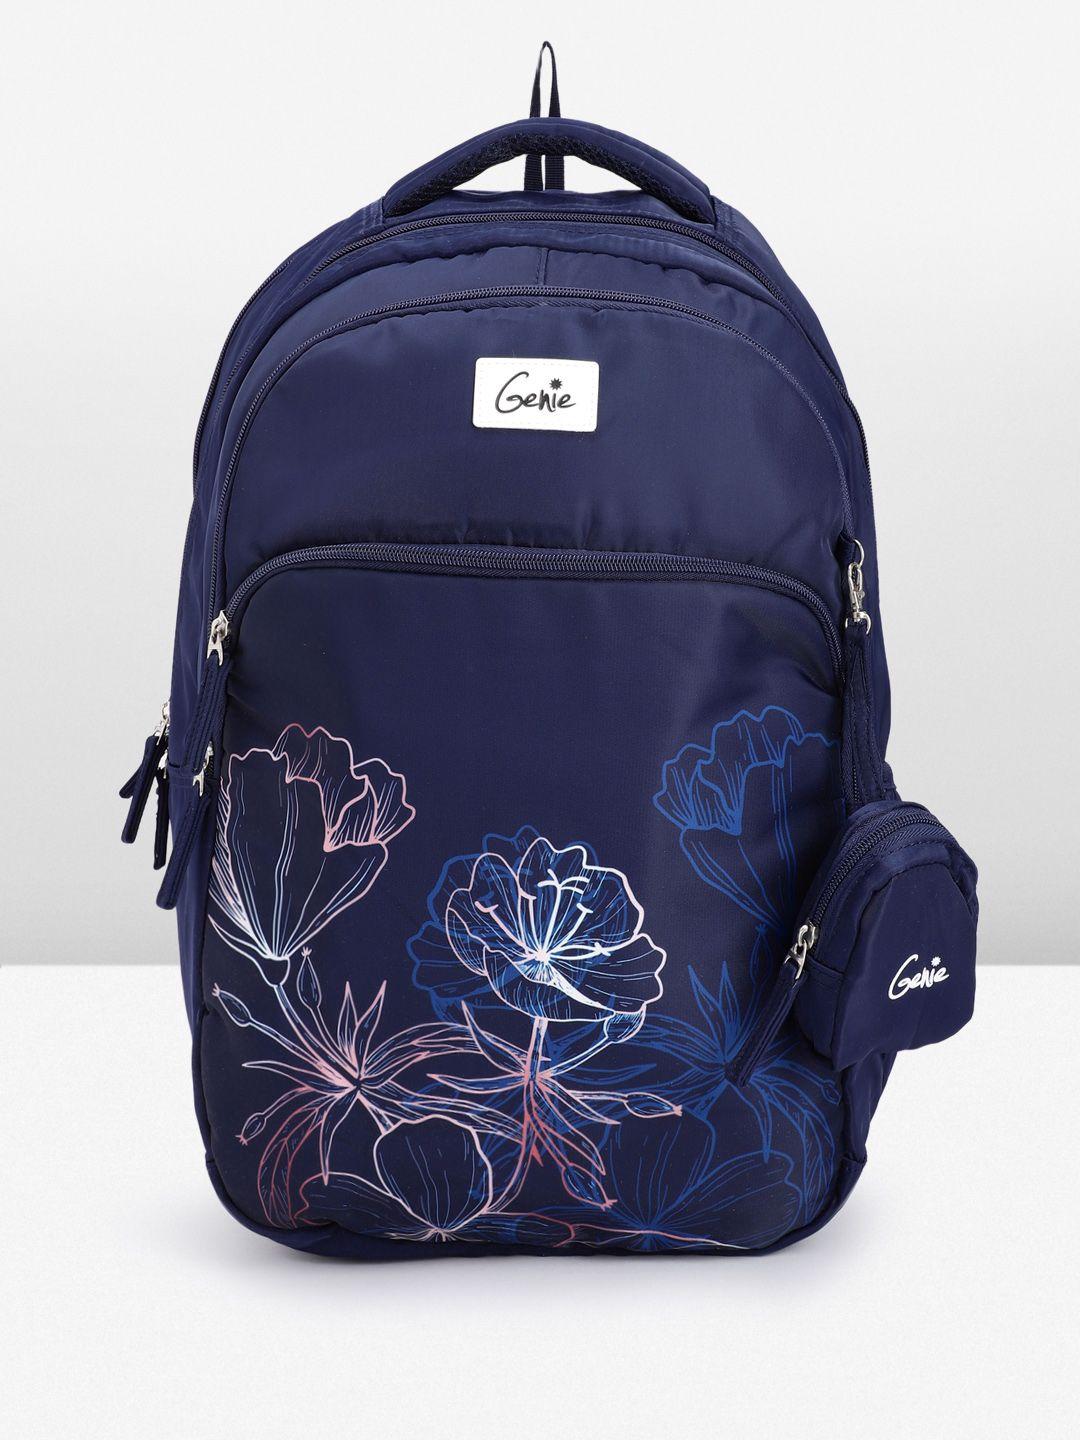 genie women hailey laptop backpack